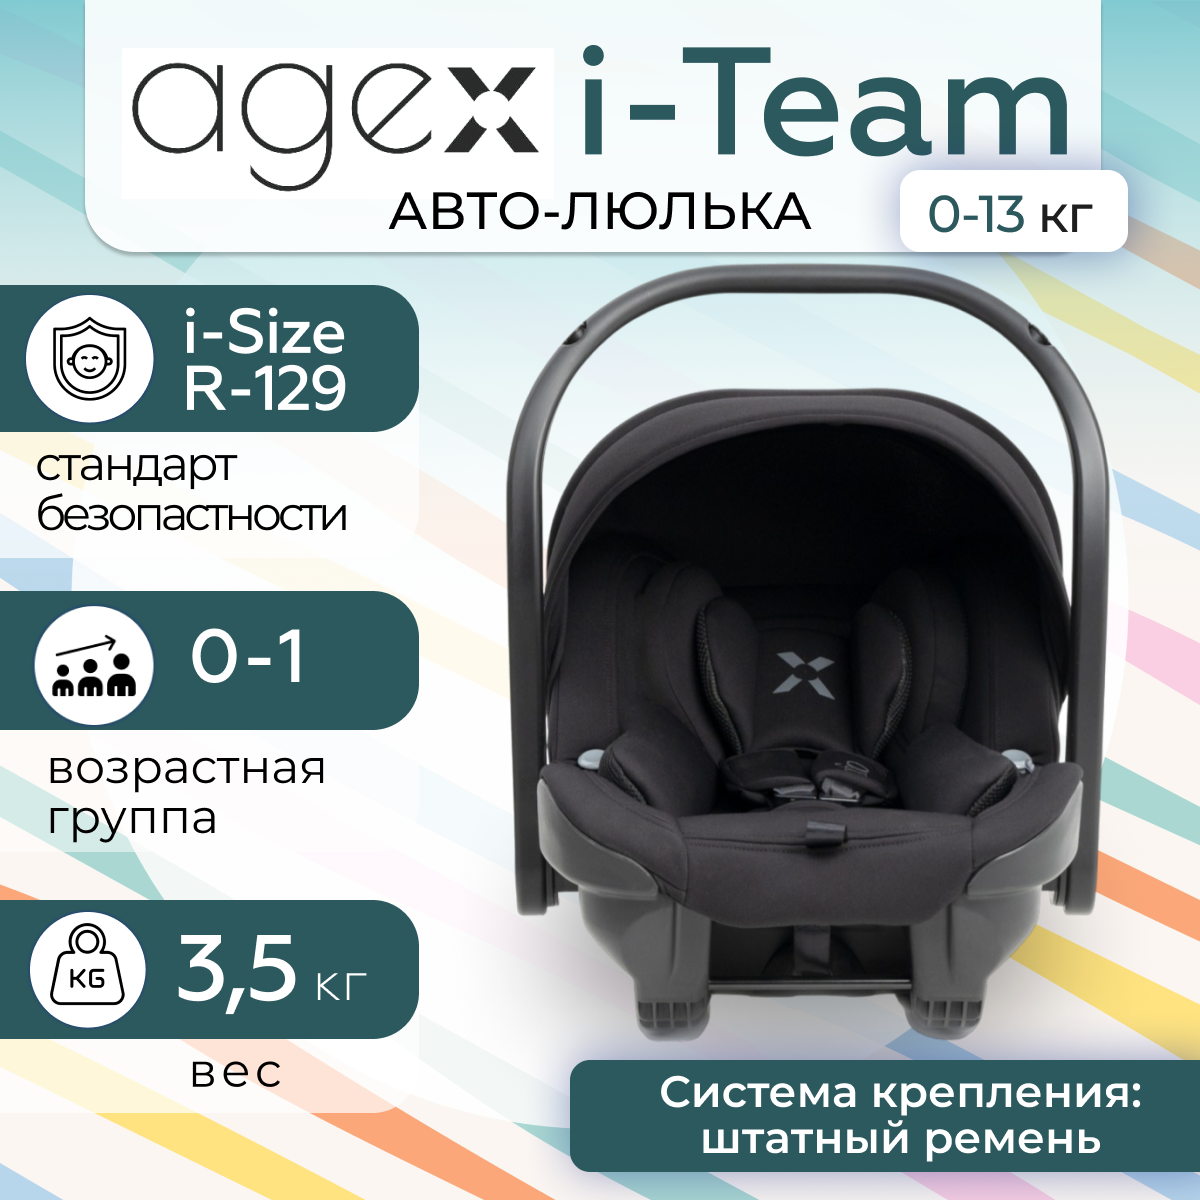 Автокресло Agex i-Team серый, 0-13 кг автокресло agex voyage 0 25 кг